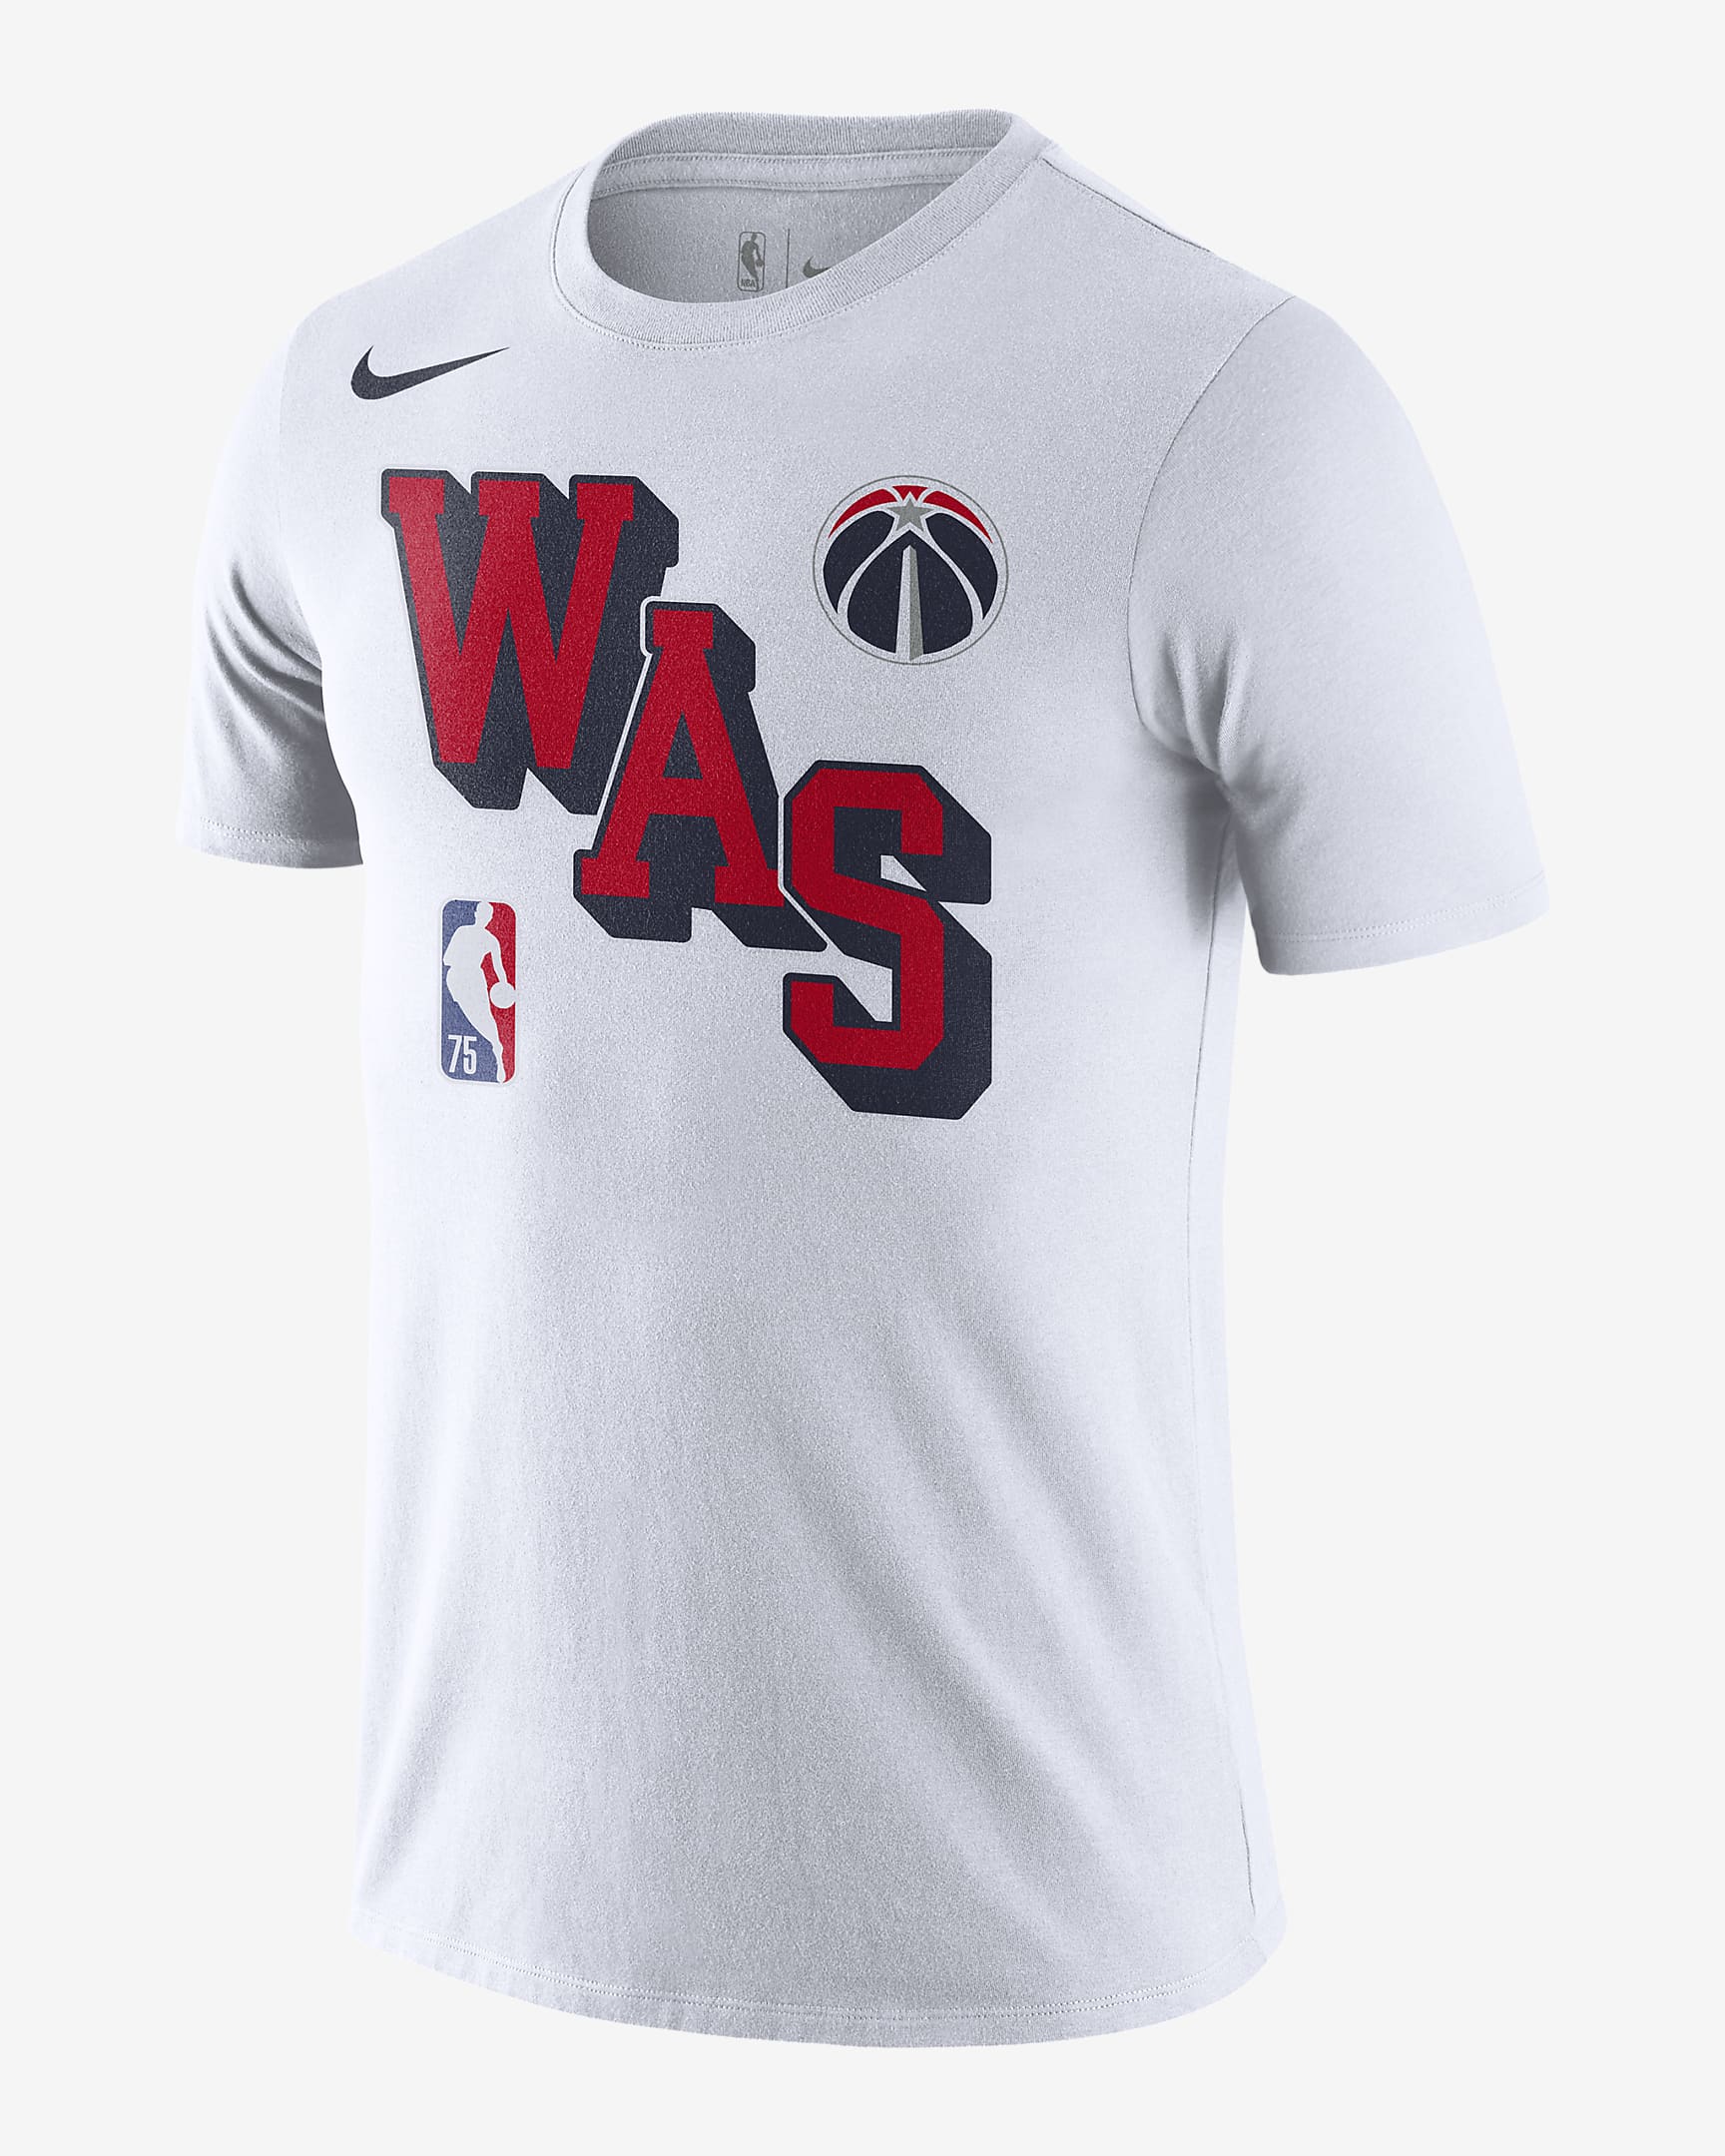 Men's XL Nike Dry Short Sleeve Basketball Shirt NBA Chicago